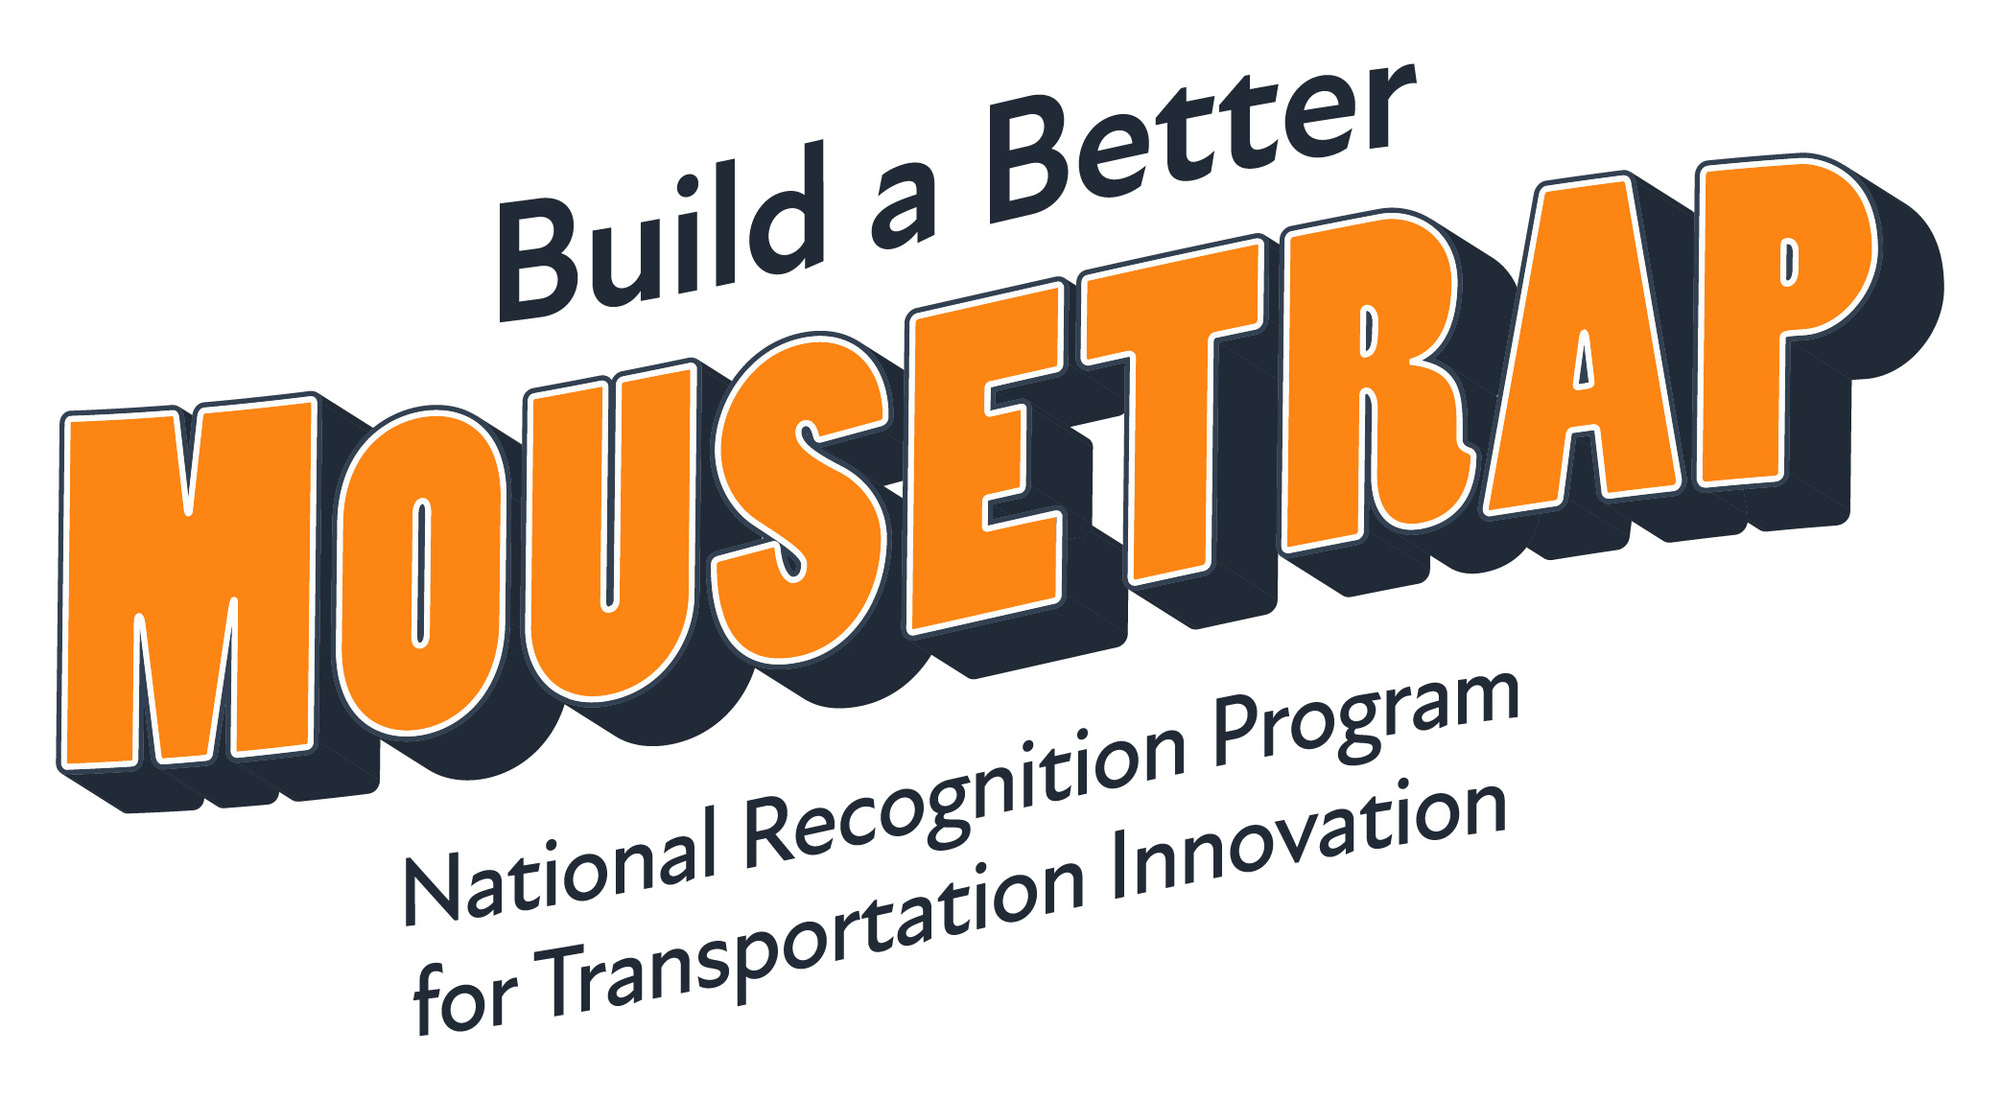 Build a Better Mousetrap    National Recognition Program for Transportation Innovation